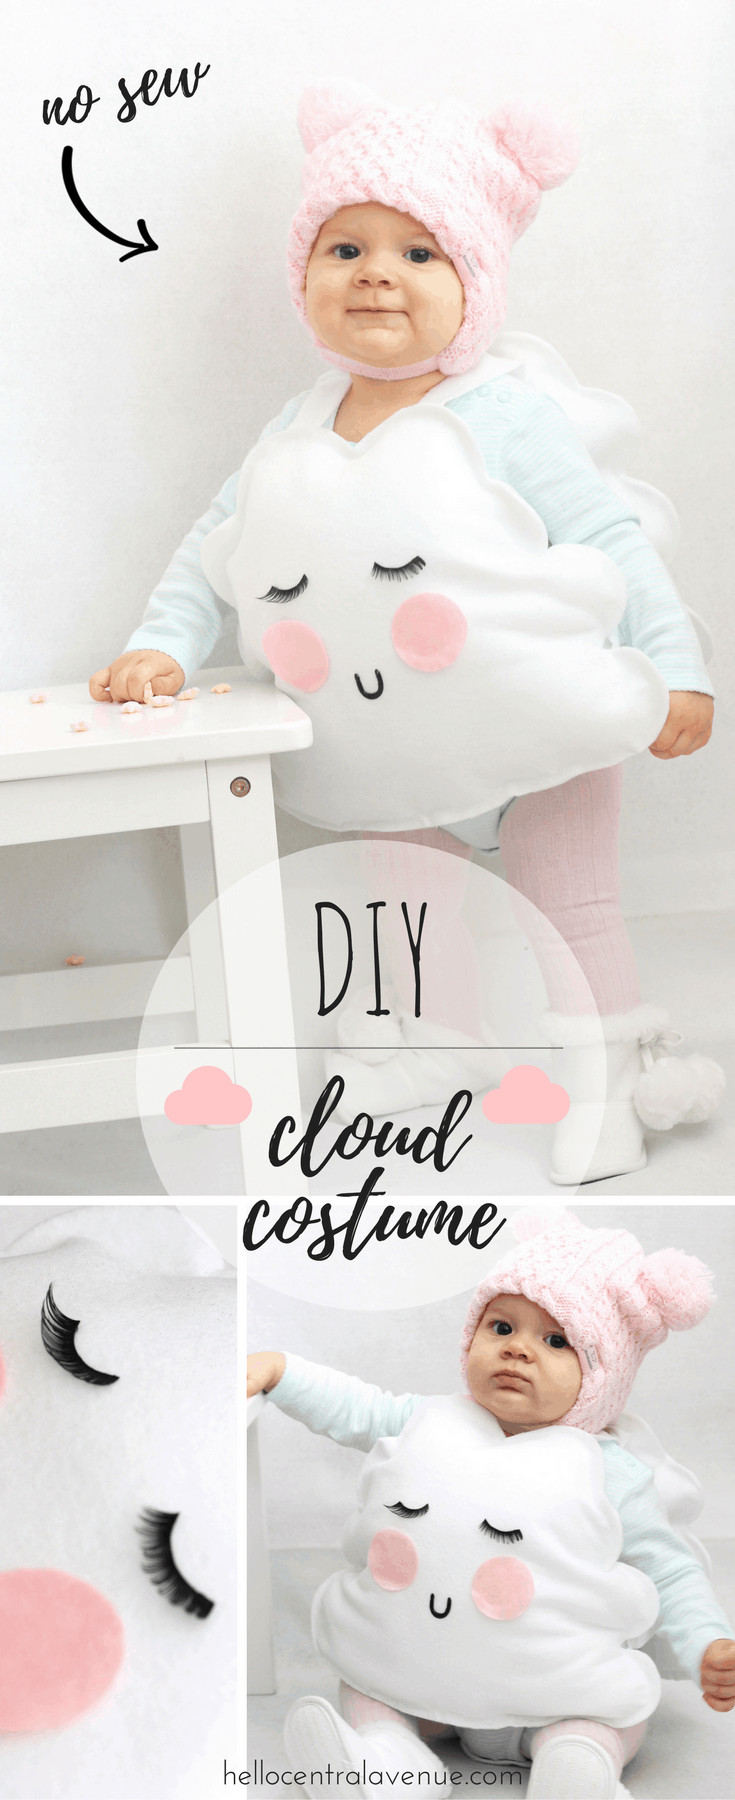 Cloud Costume DIY
 DIY No Sew Cloud Costume Hello Central Avenue